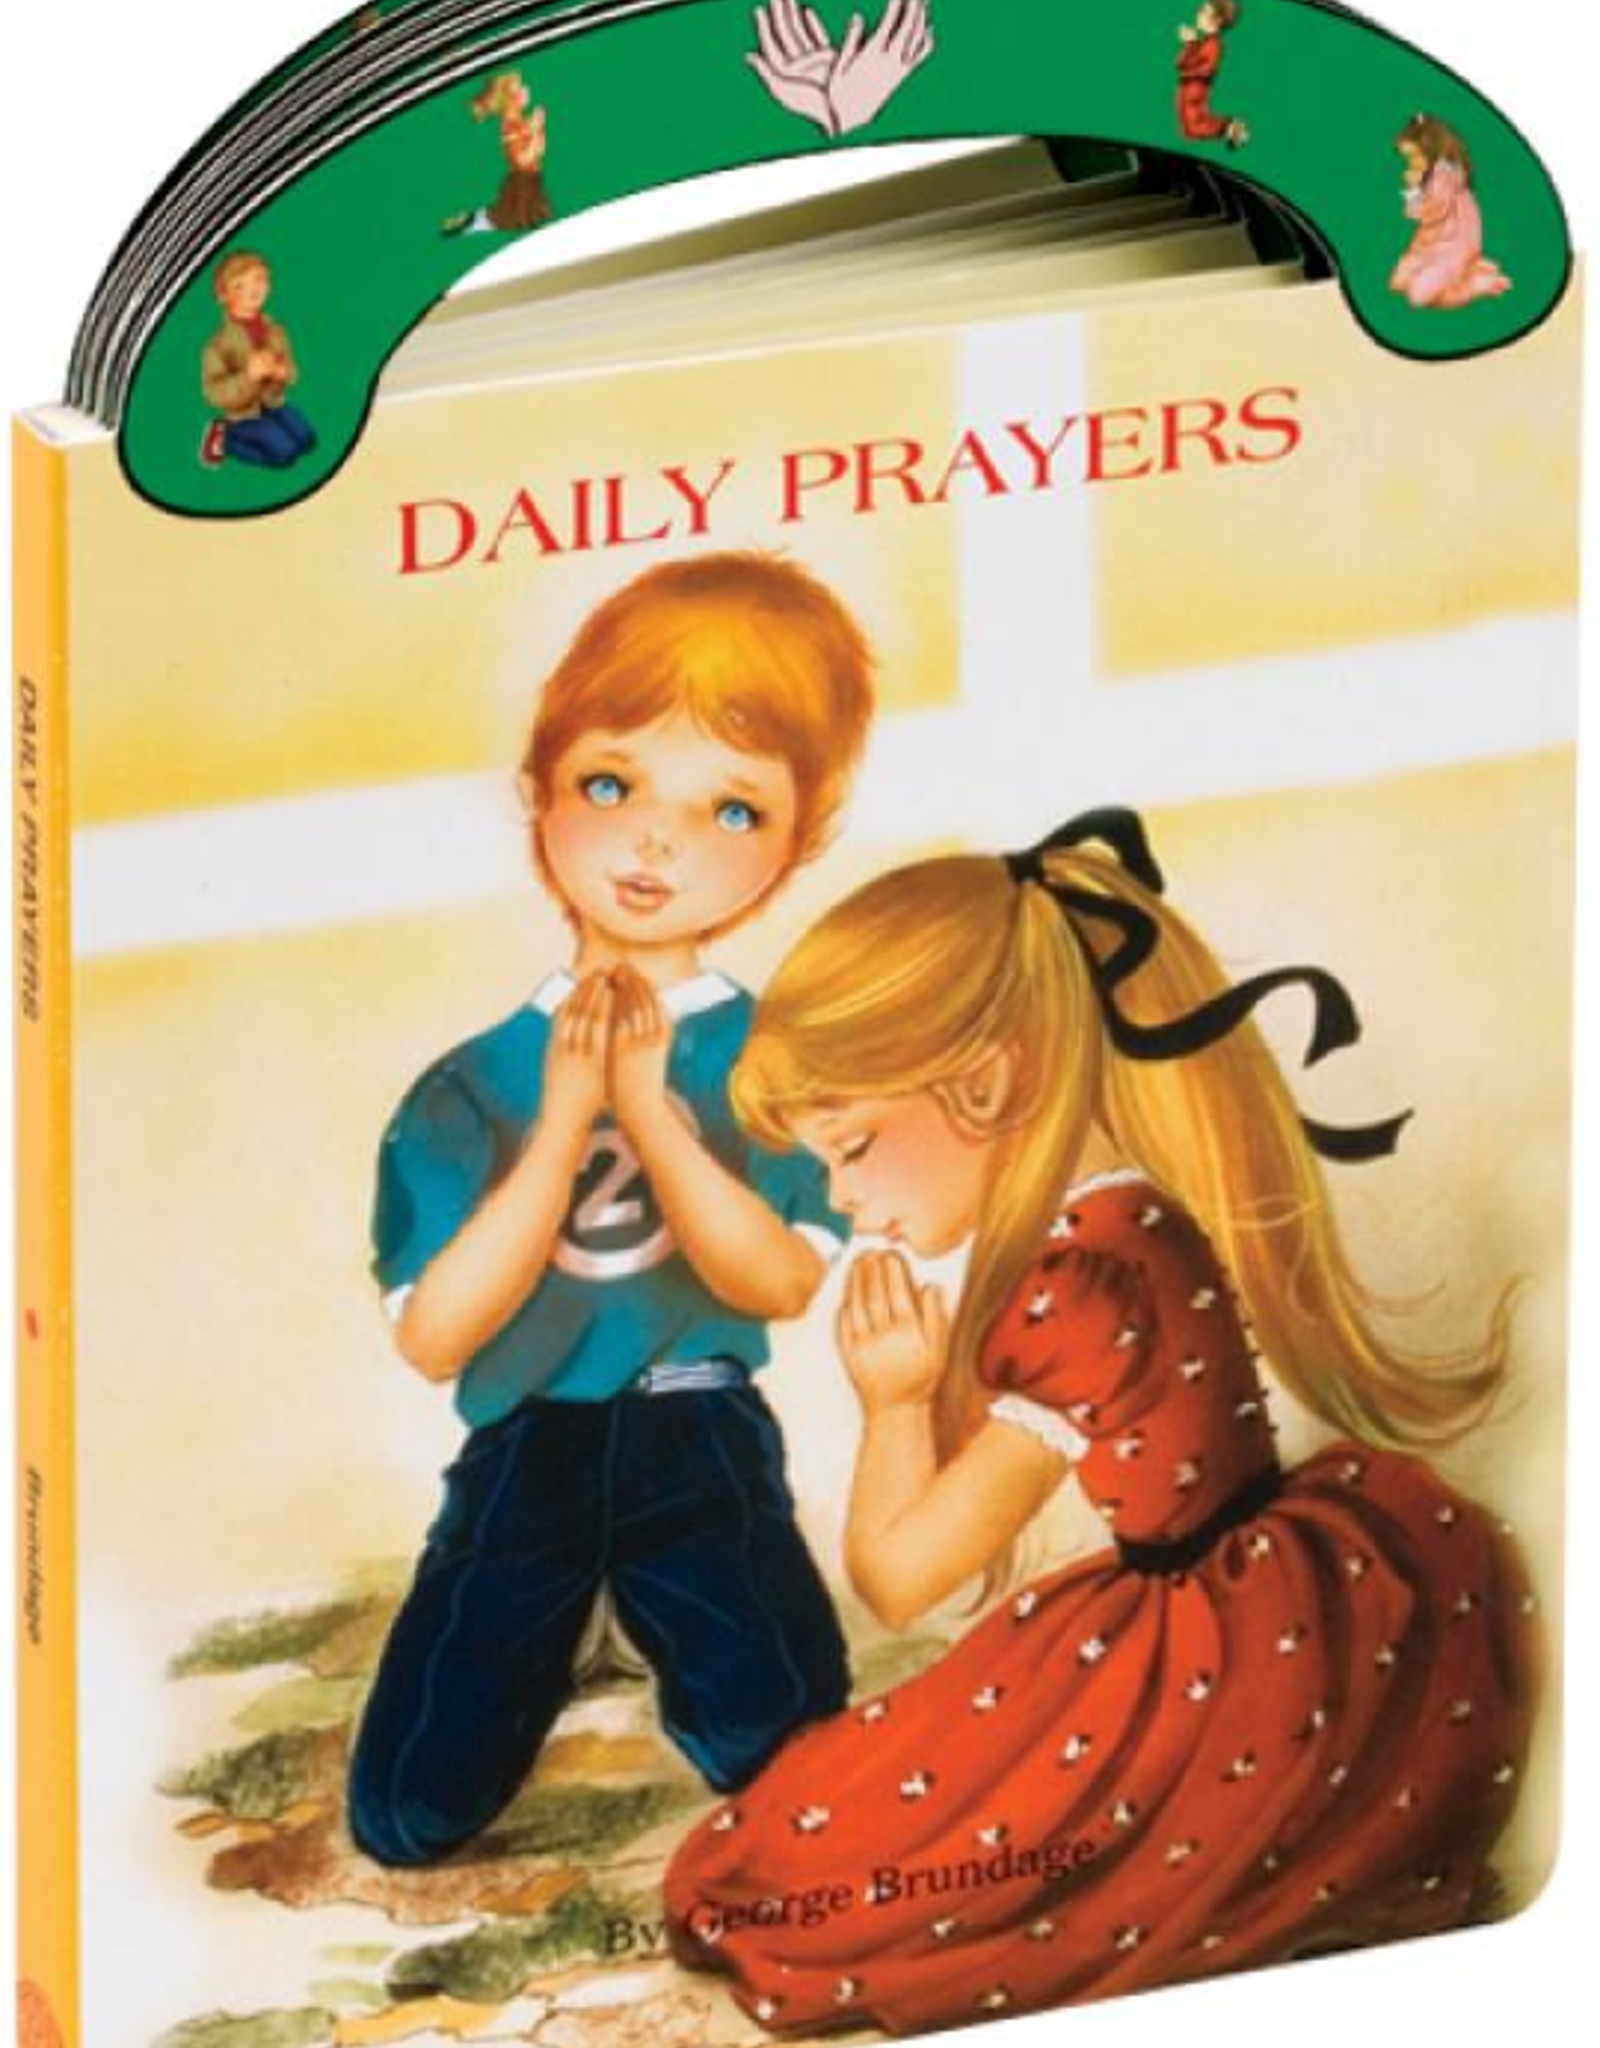 Catholic Book Publishing Daily Prayers (St. Joseph "Carry Me Along" Board Book), by George Brundage